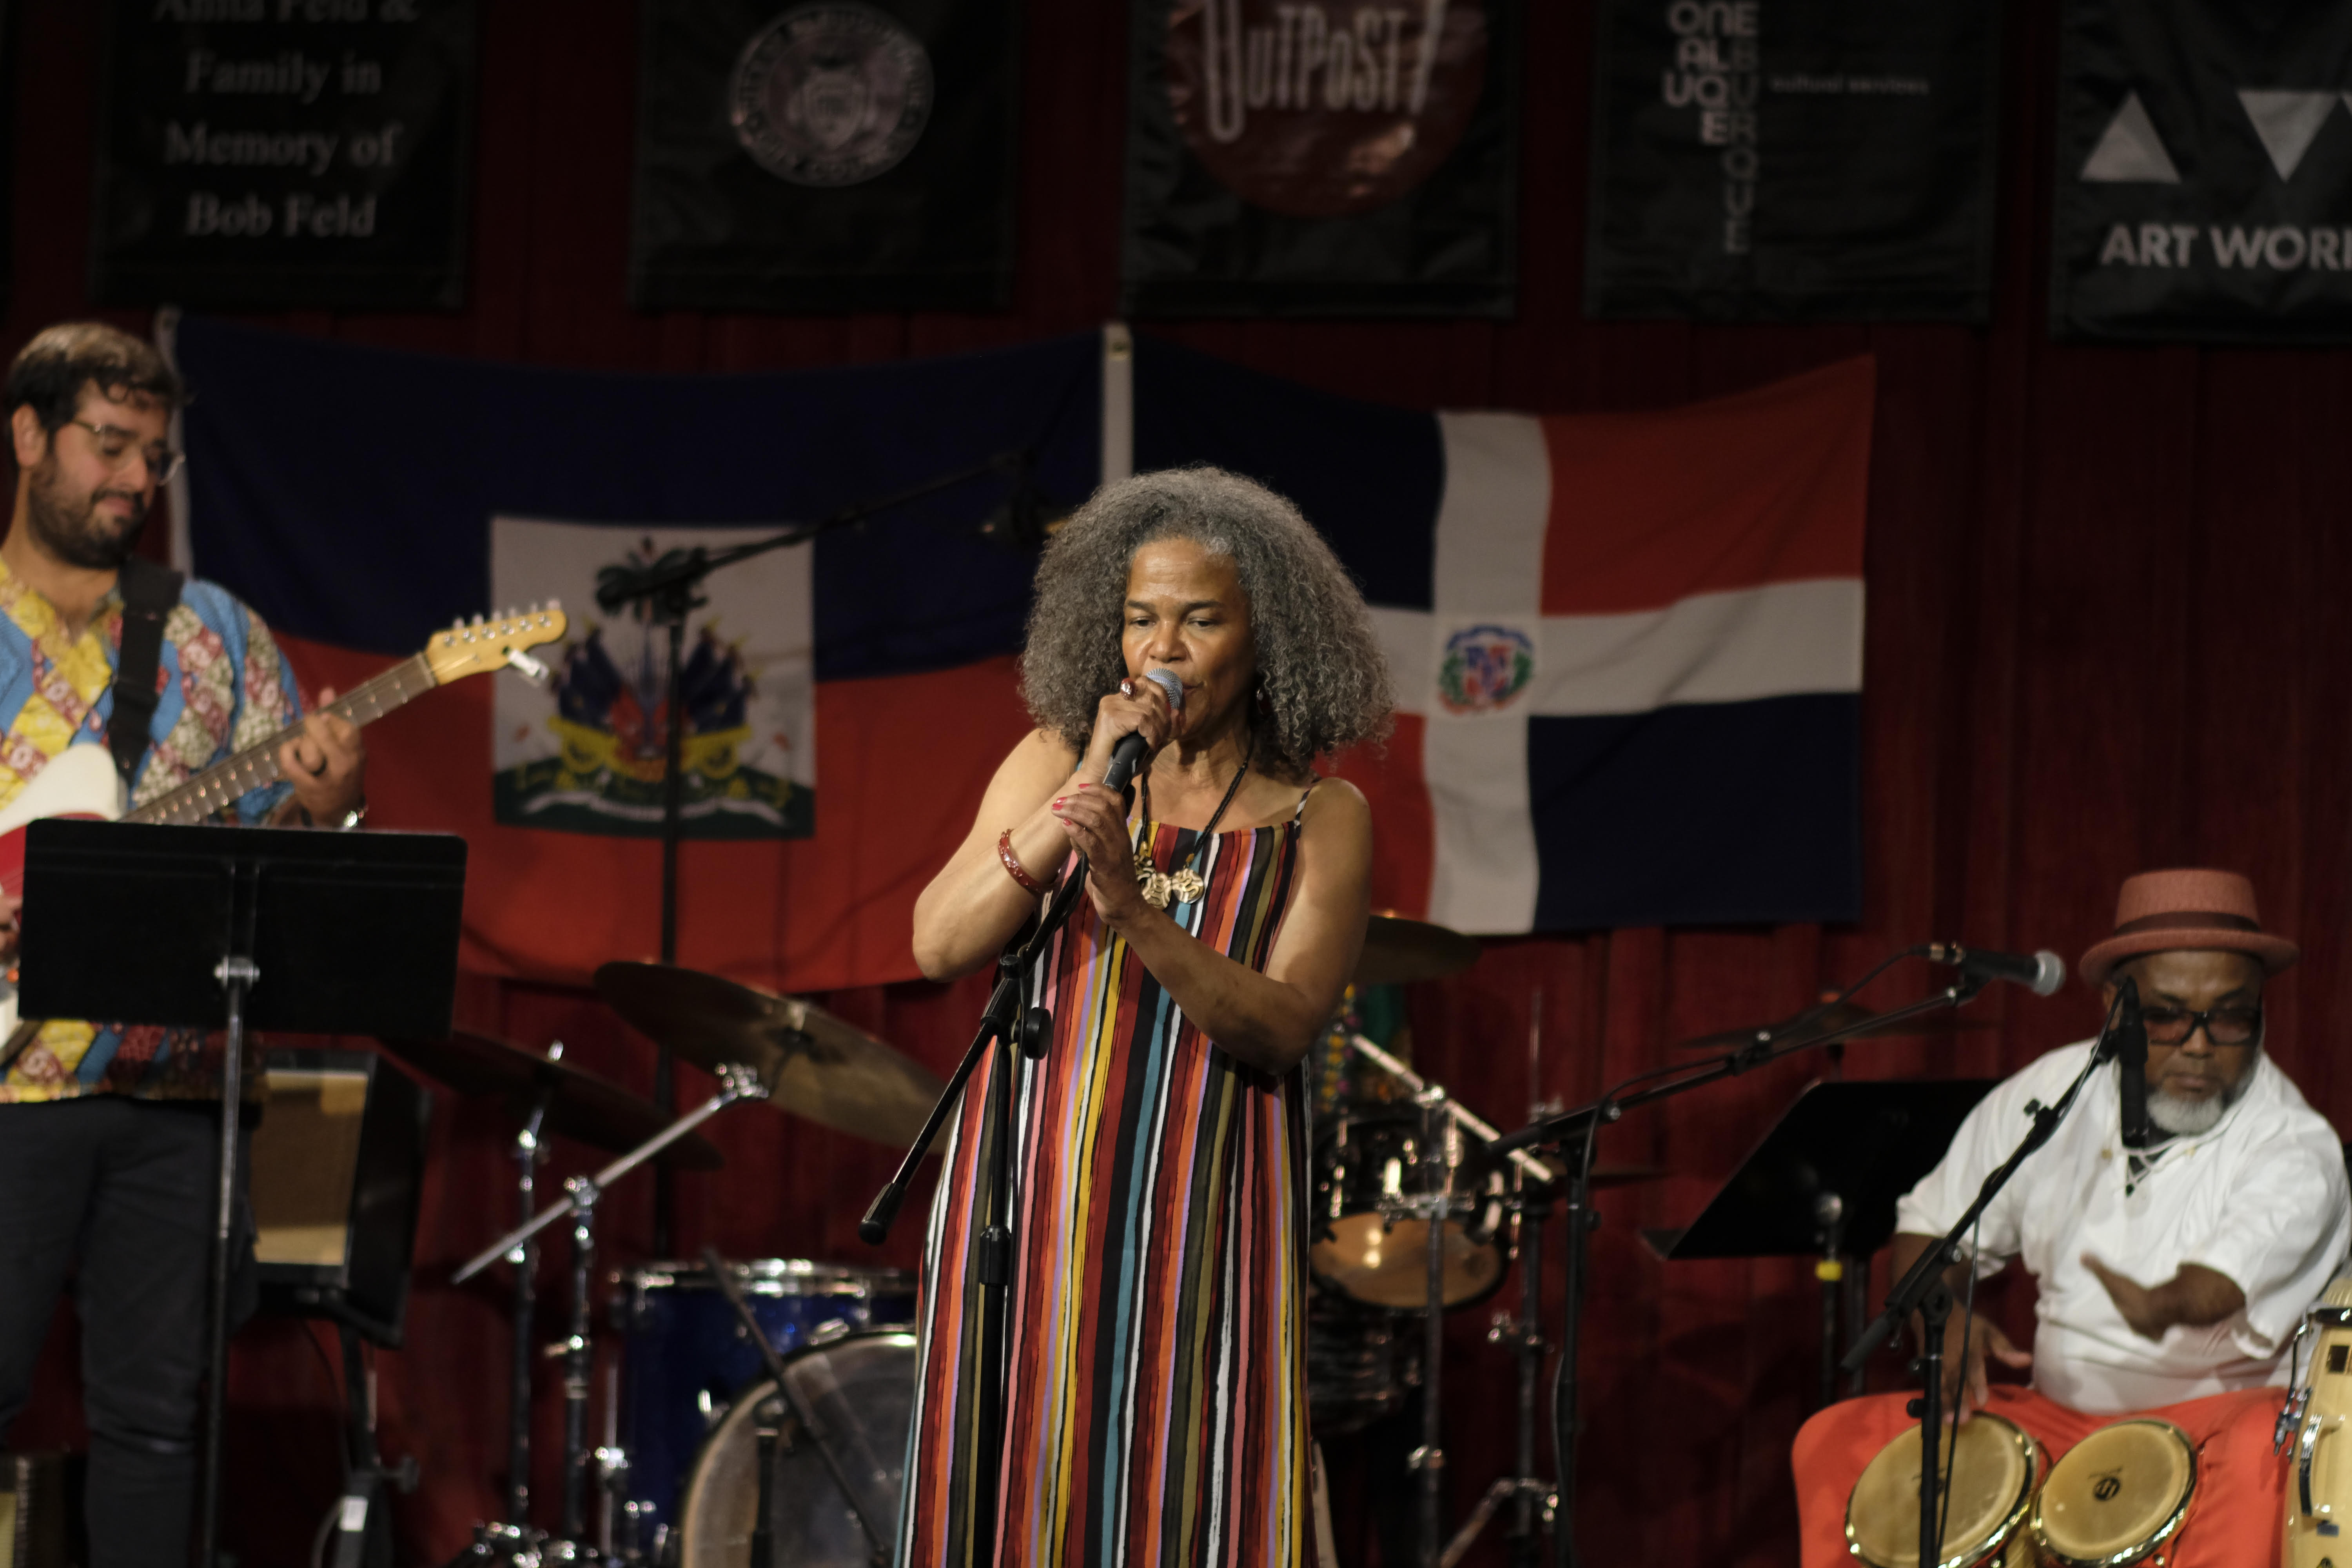 Maria Terrero of Kumba Carey in a multi-colored stripe dress gripping a microphone